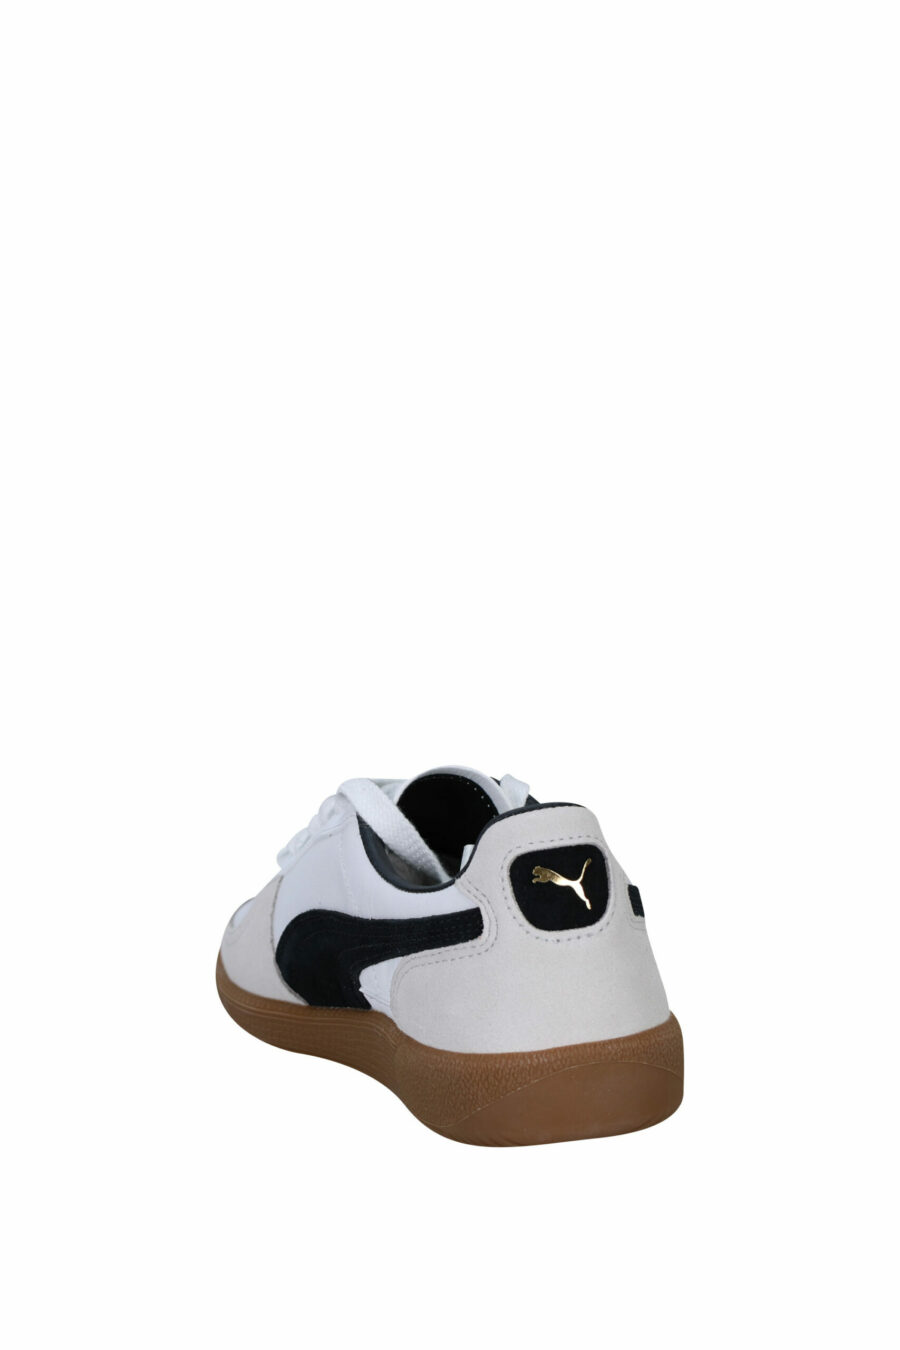 Zapatillas "palermo" blancas mix con logo - 4099685703241 3 scaled